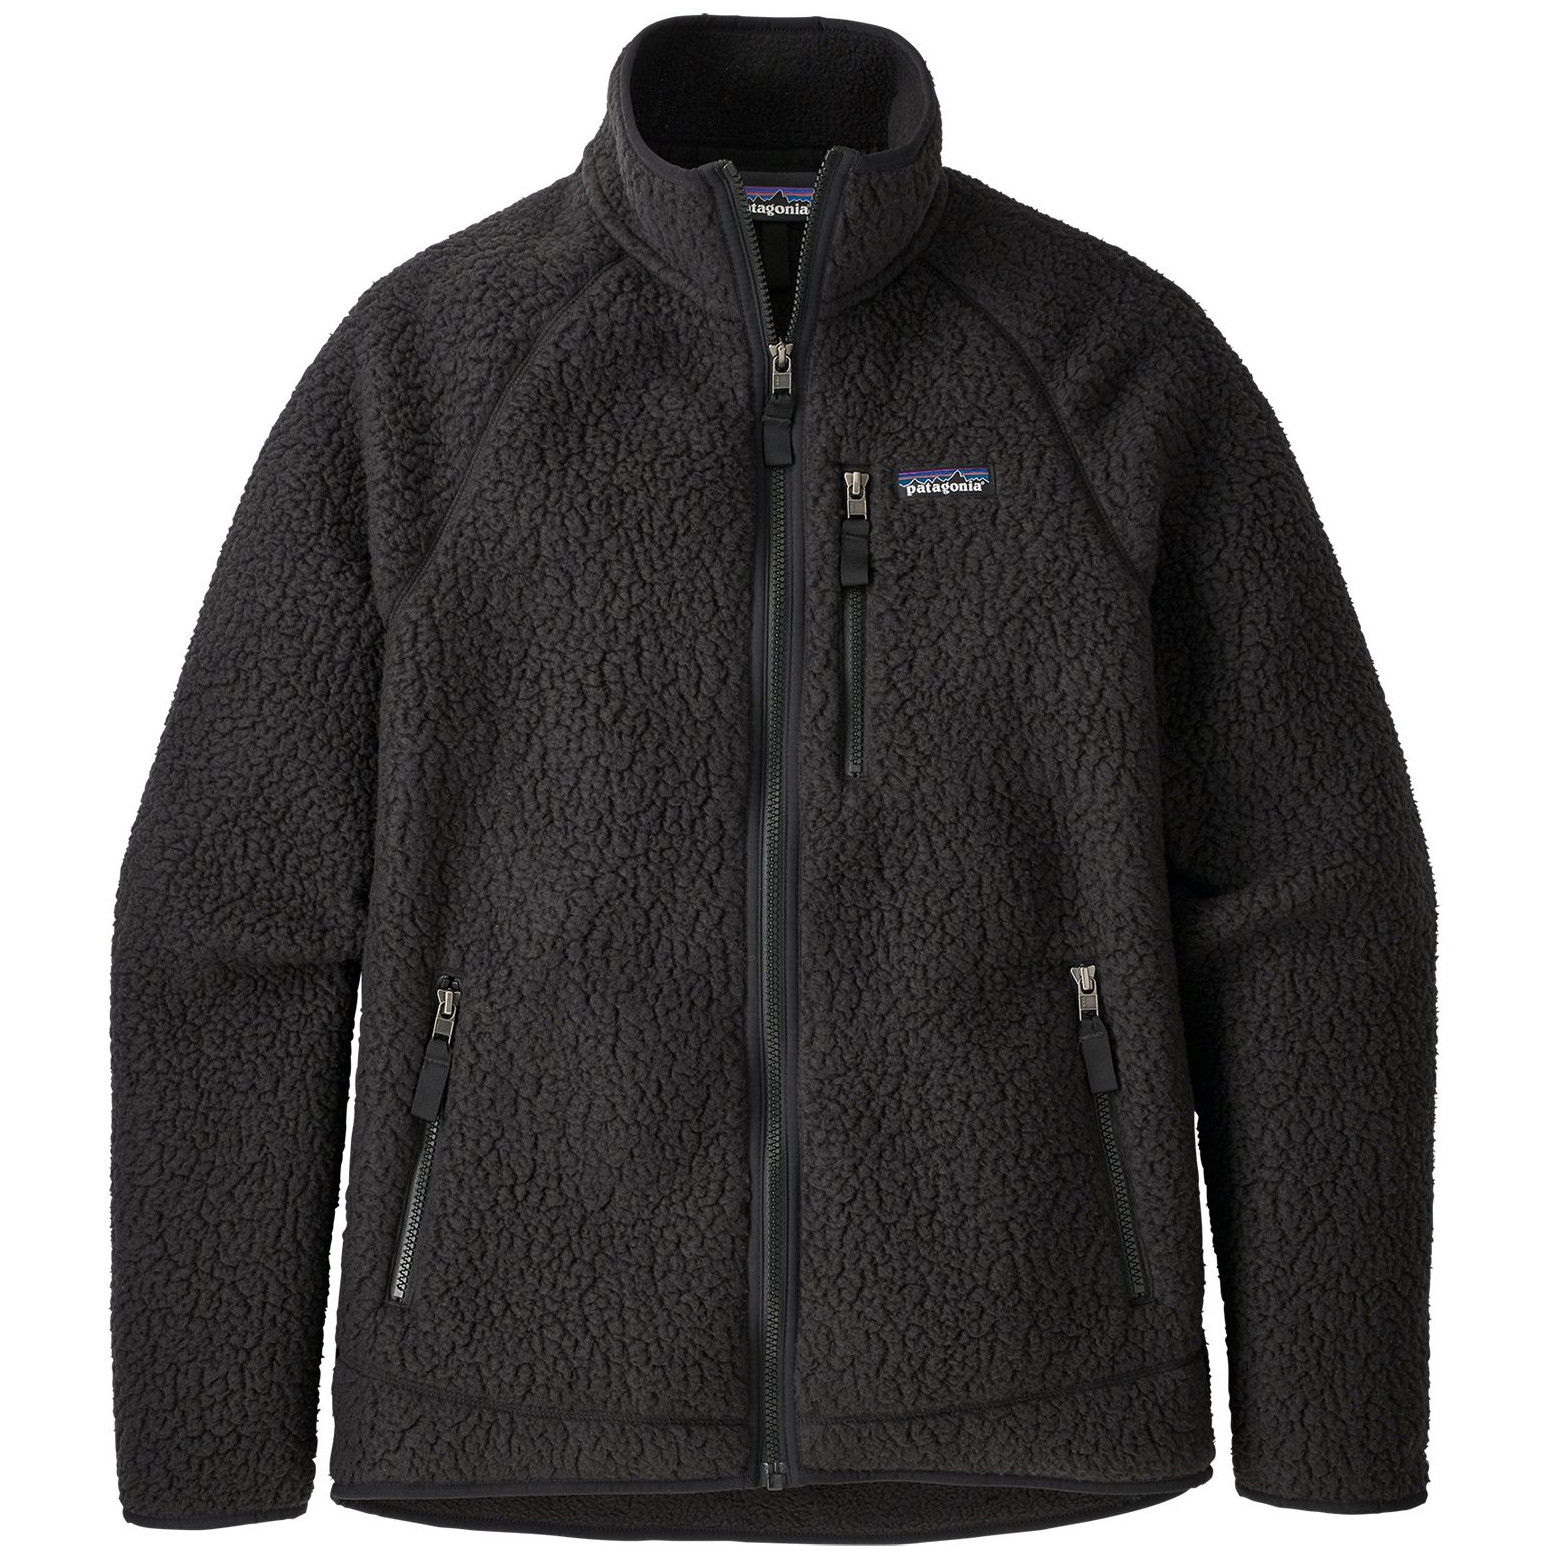 Pánská bunda Patagonia Retro Pile Jacket Velikost: L / Barva: černá